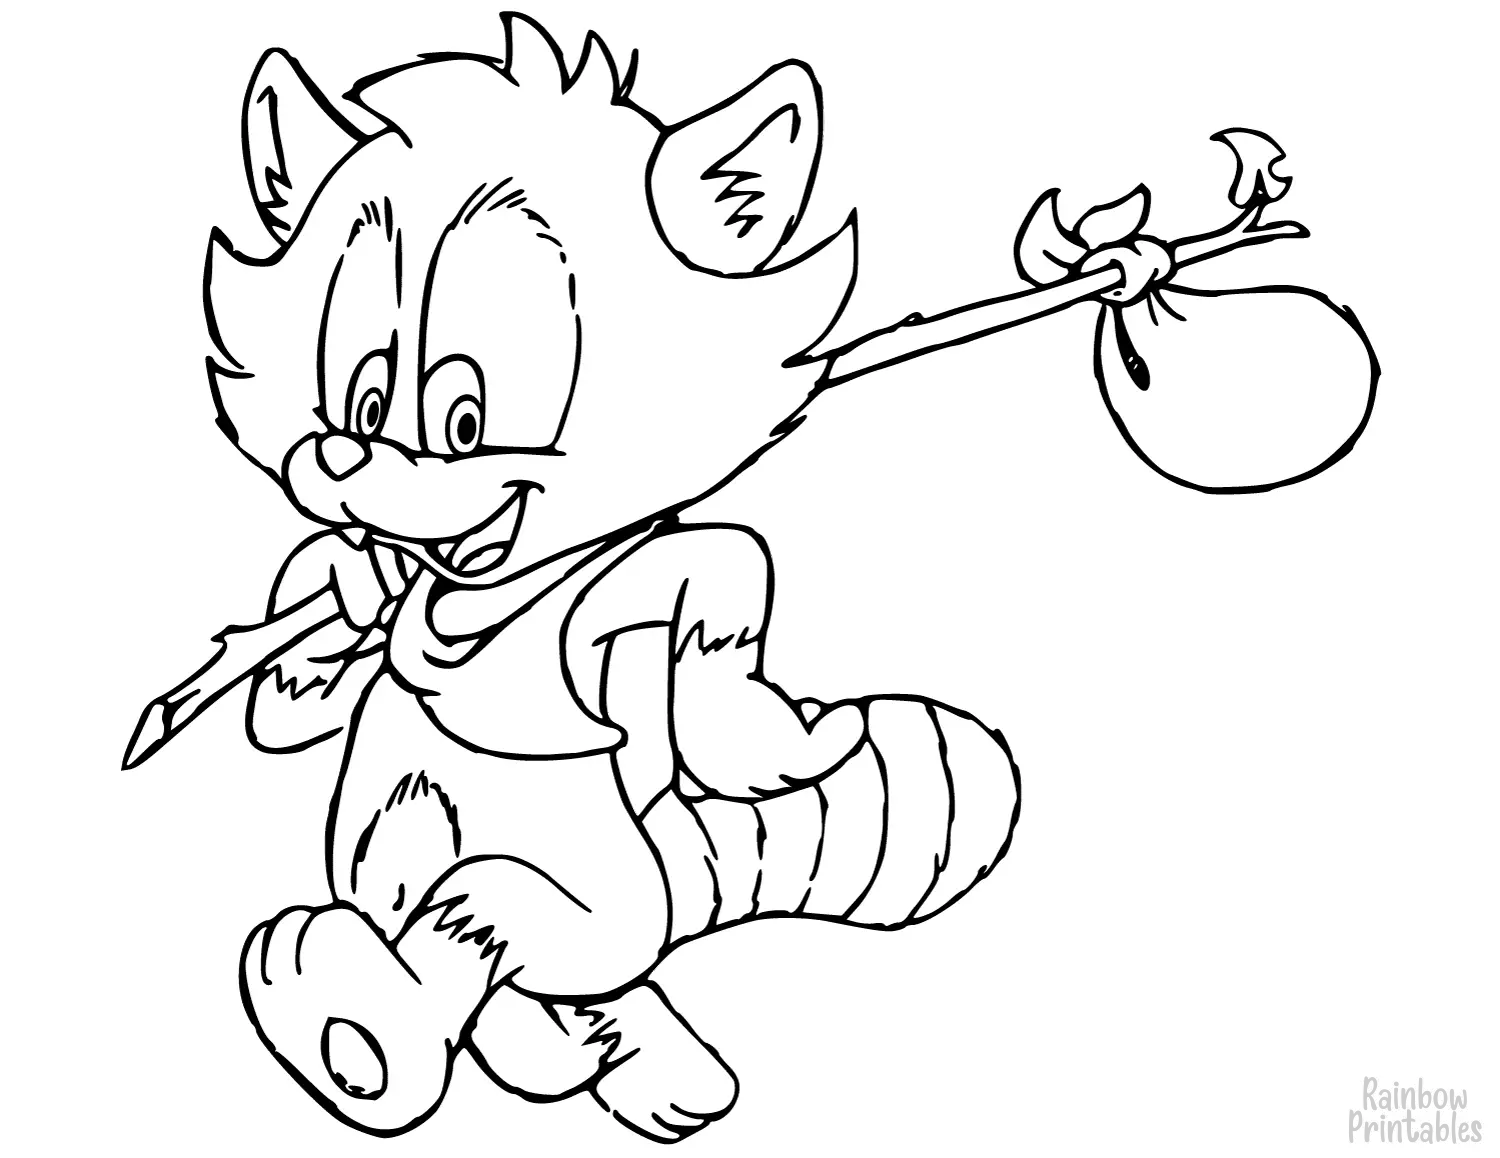 red-panda-hobo-cute-cartoon-raccoon-coloring-page